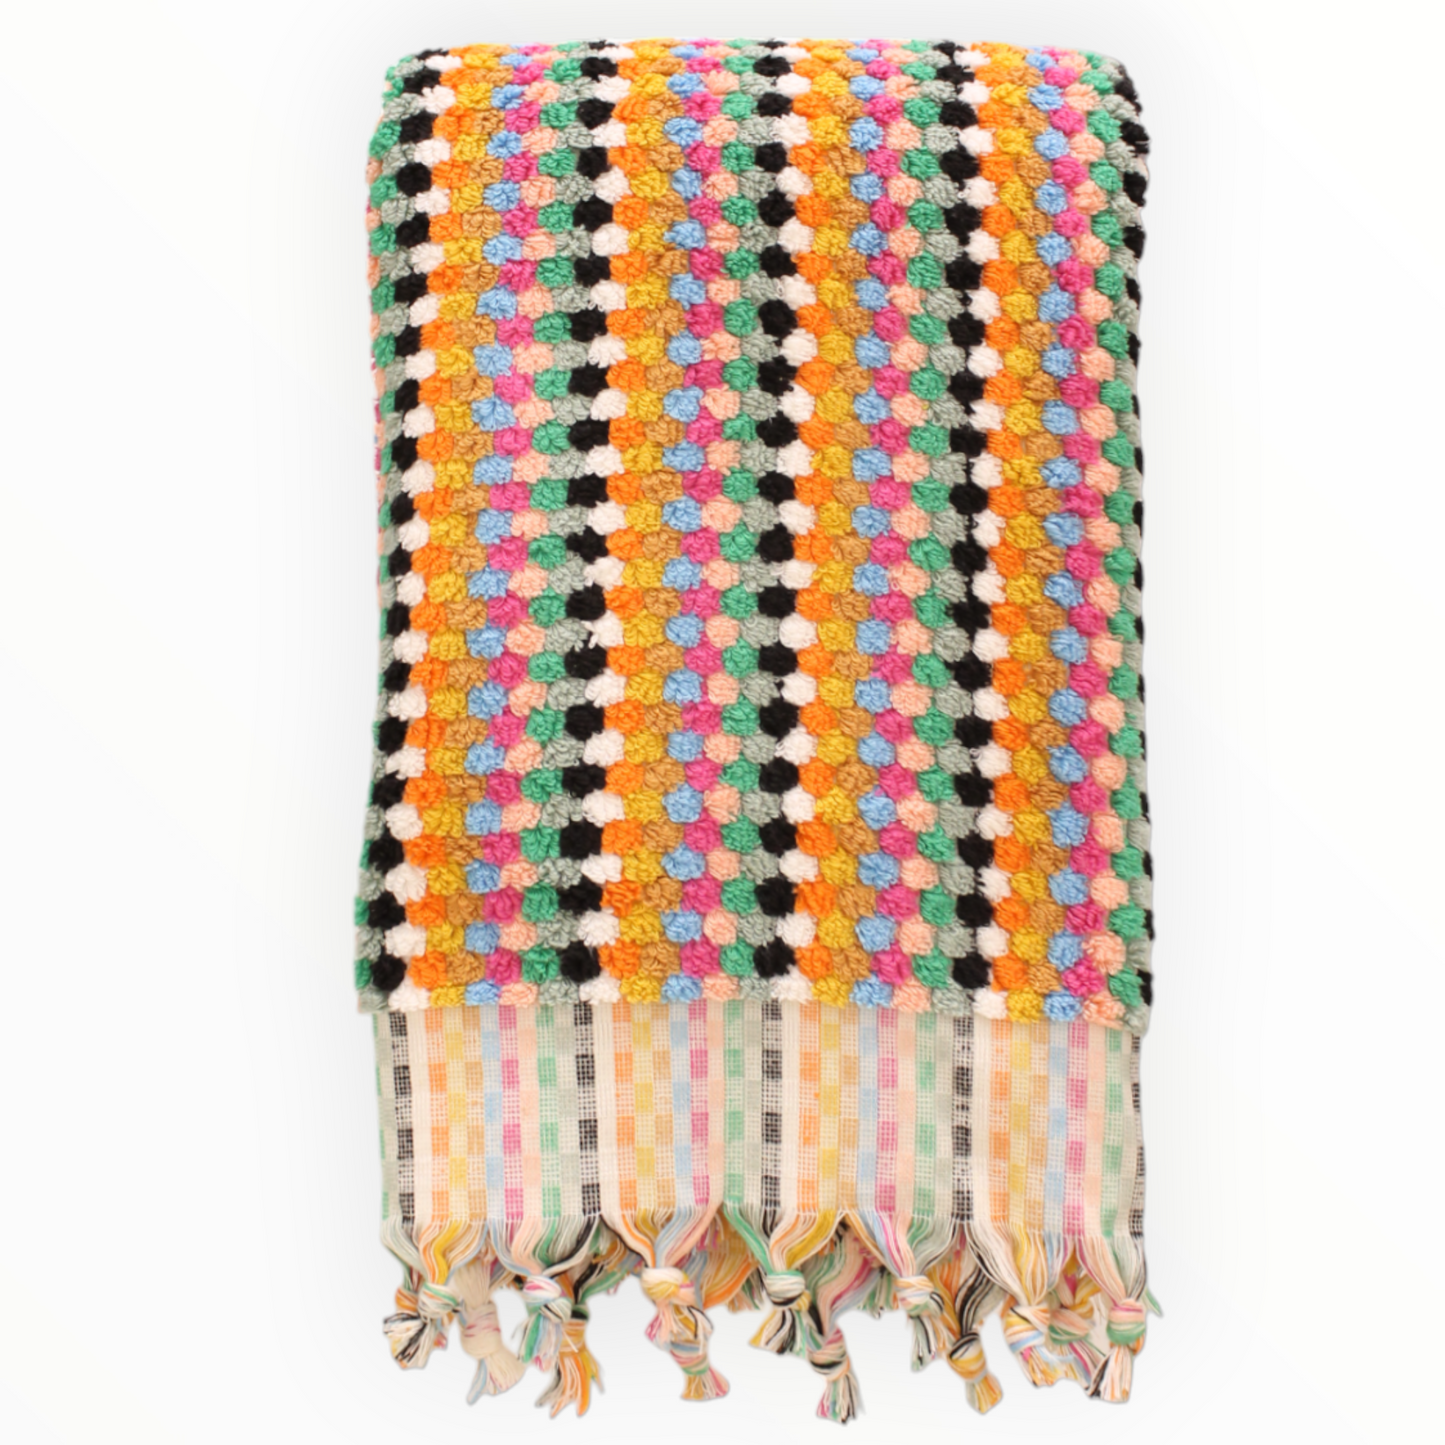 Designer Natural Cotton Hand-Woven Turkish Terry Hammam Towel